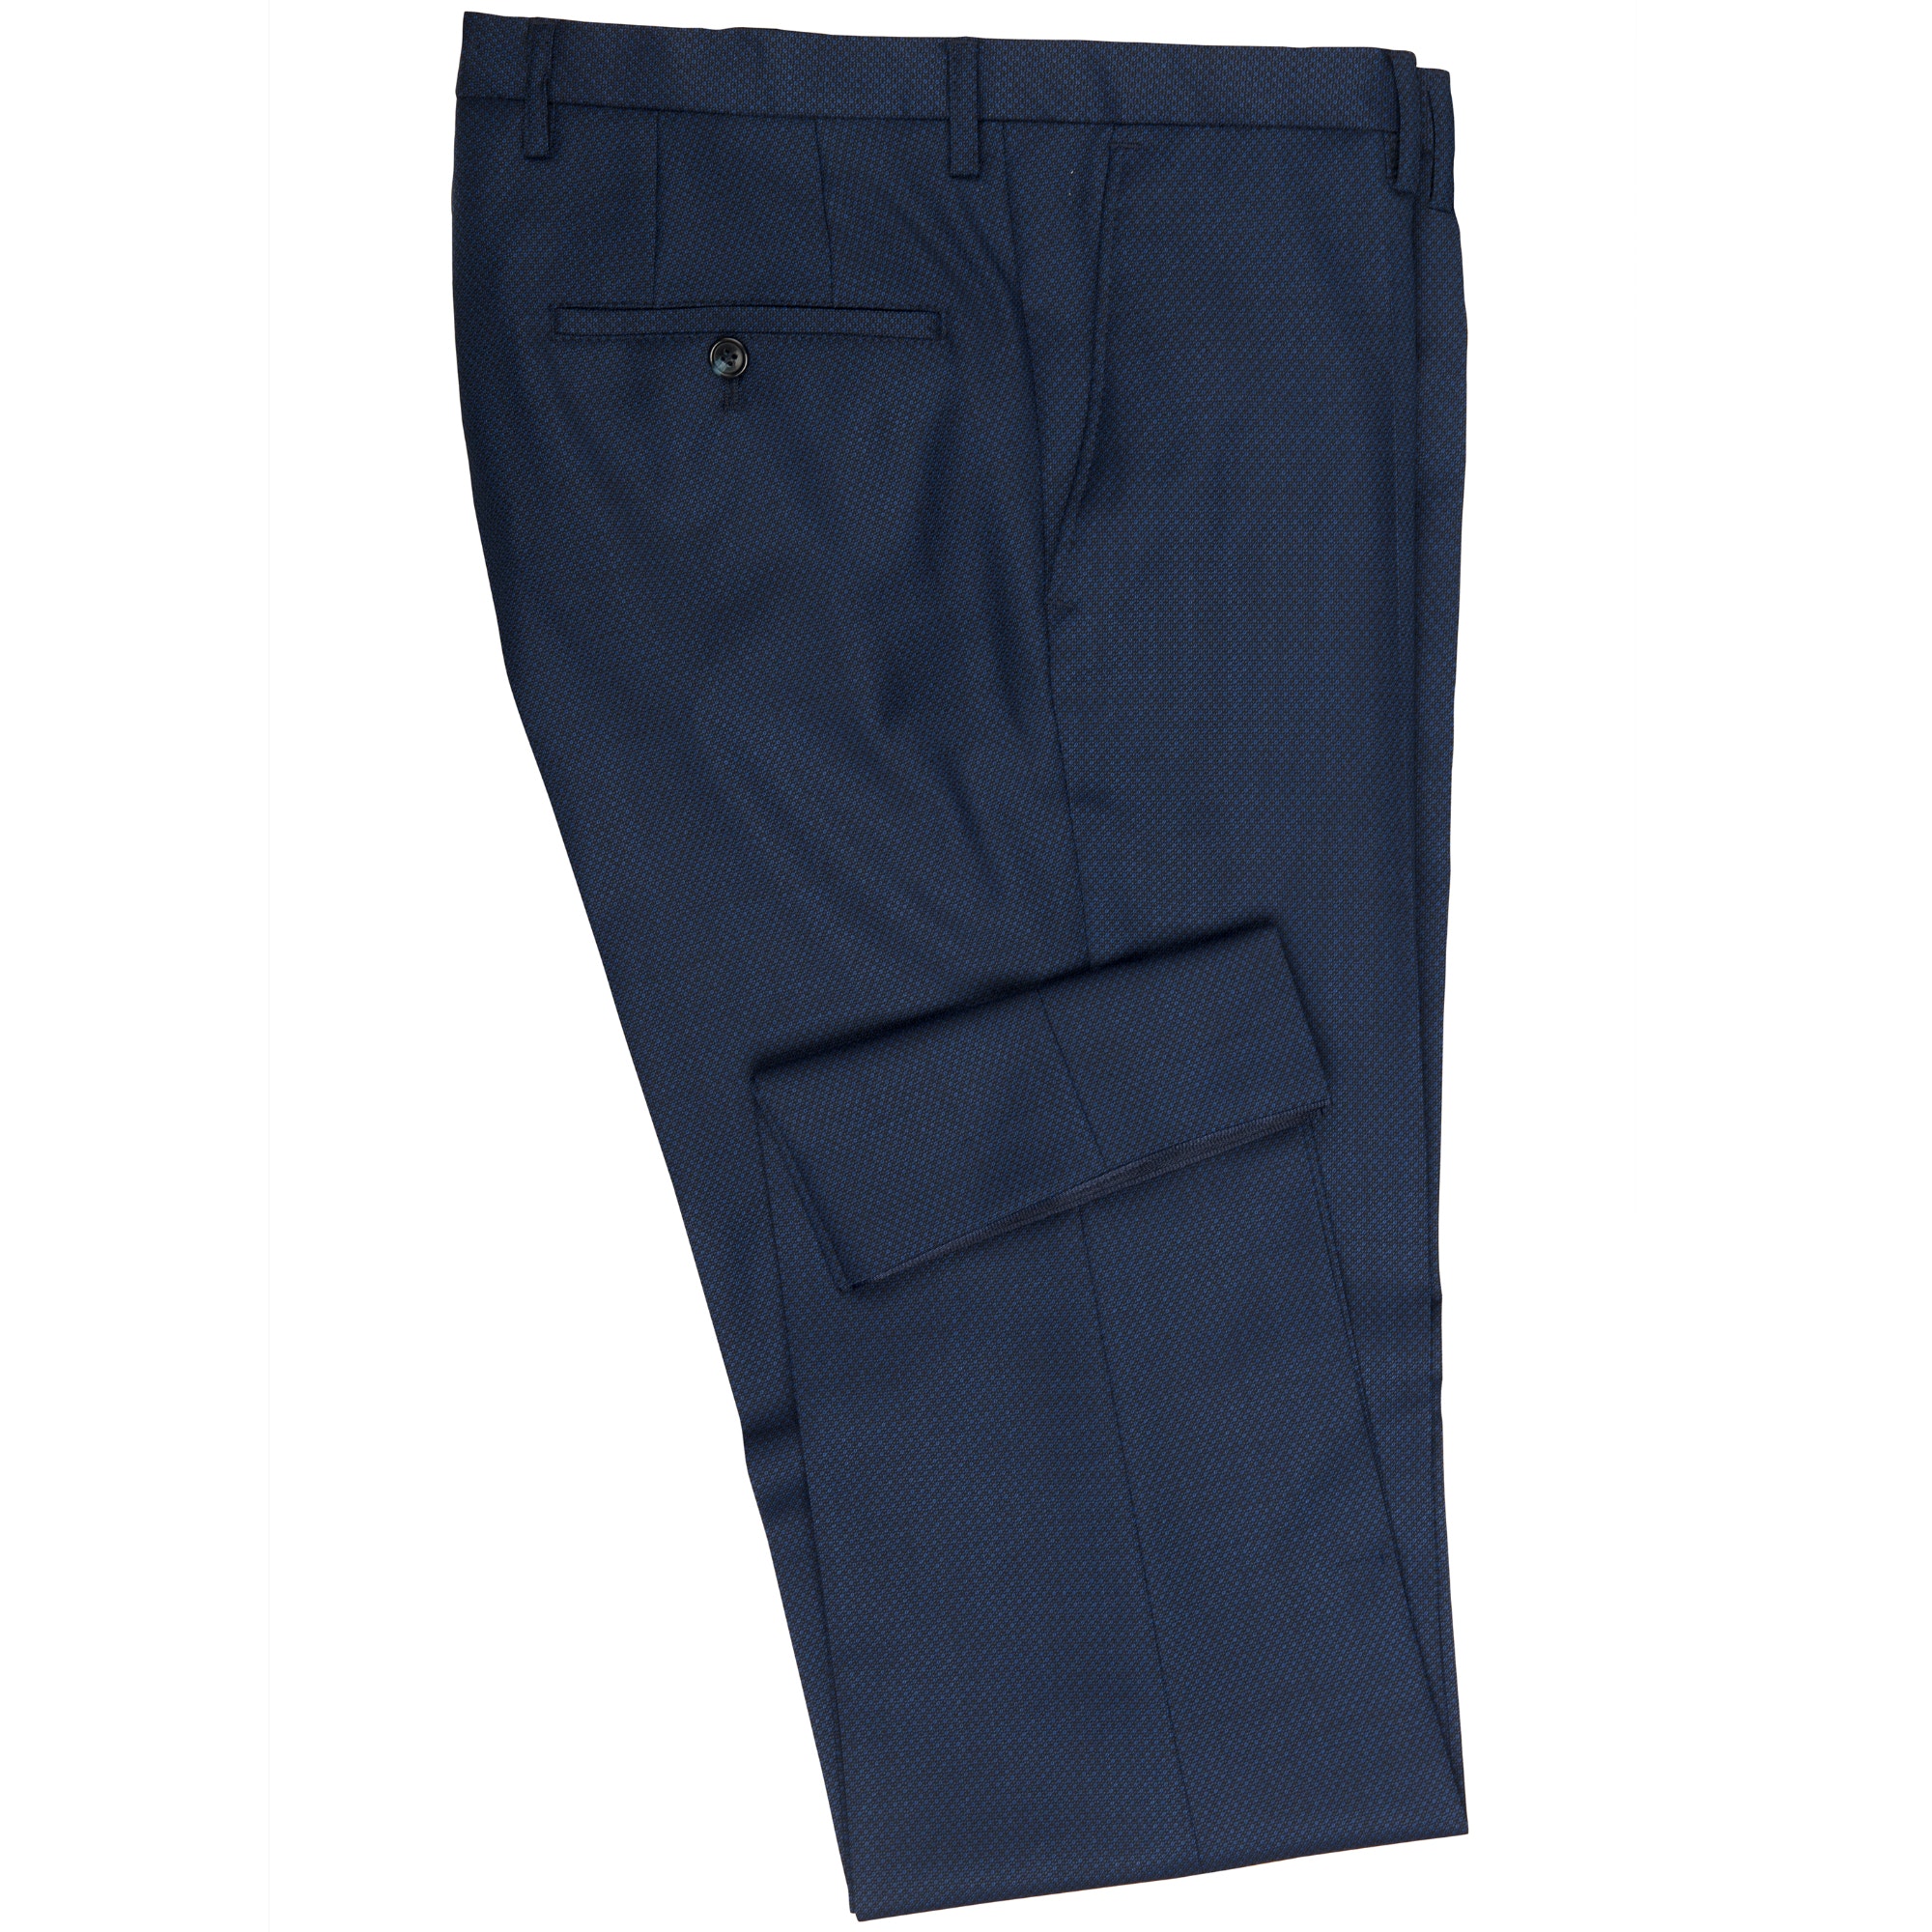 Hose/Trousers CG Archiebald